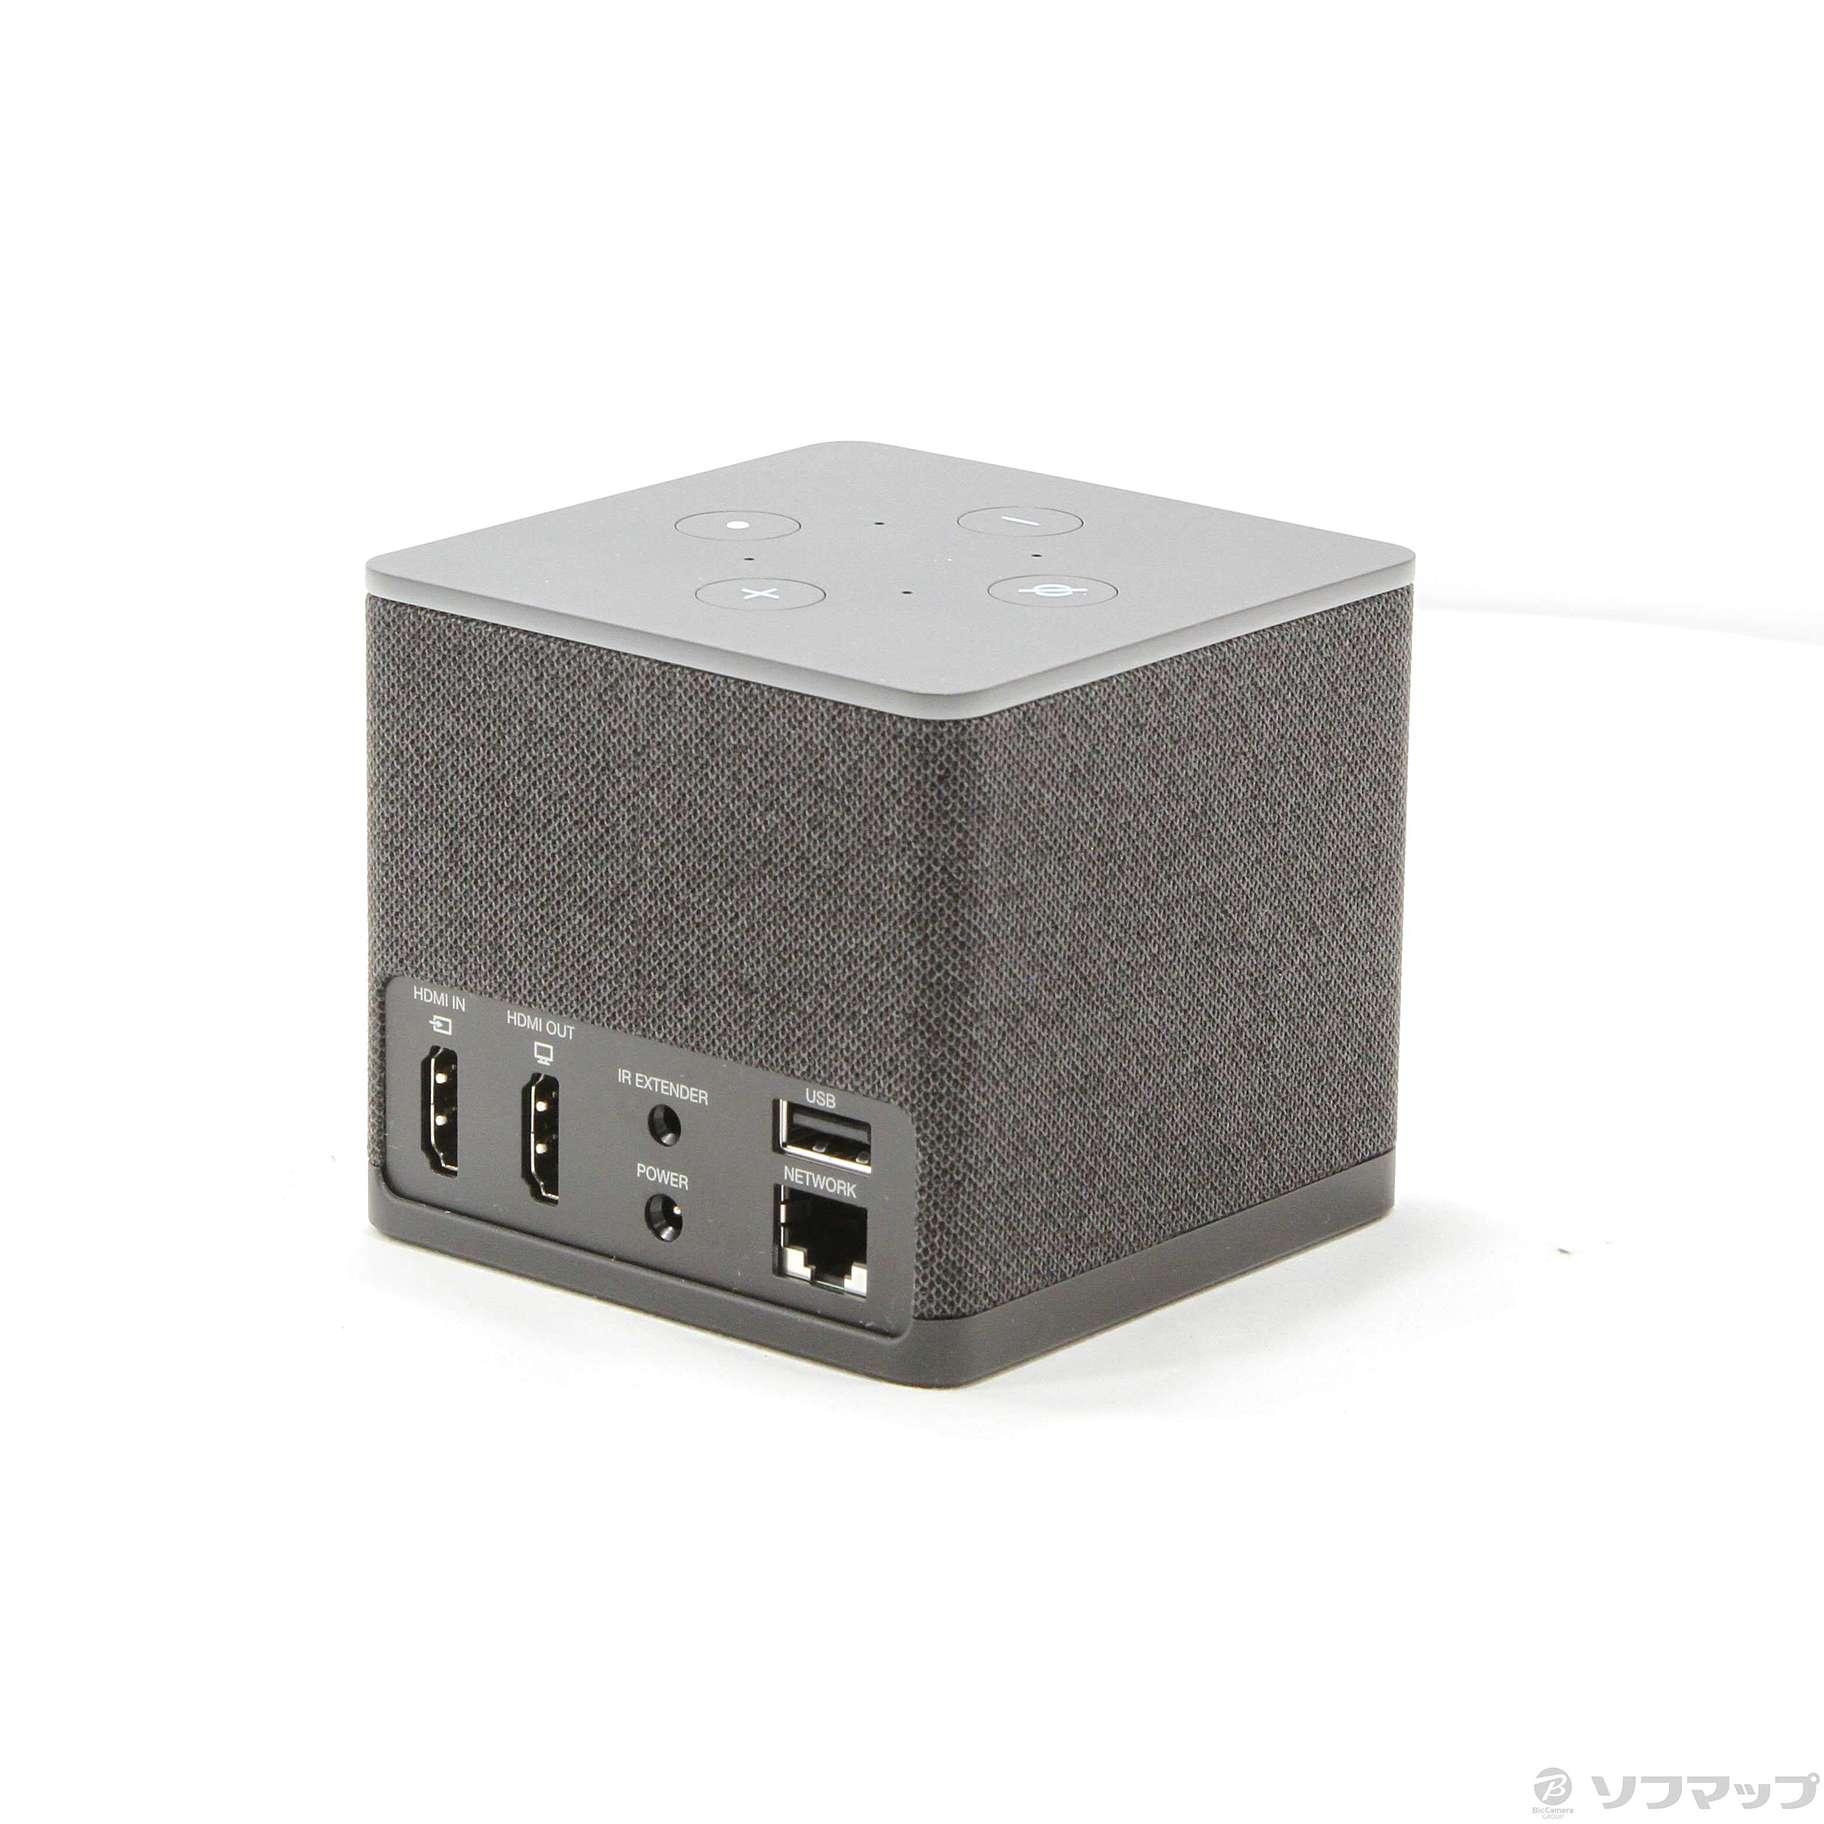 【中古】Fire TV Cube 第3世代 Alexa対応音声認識リモコン付属